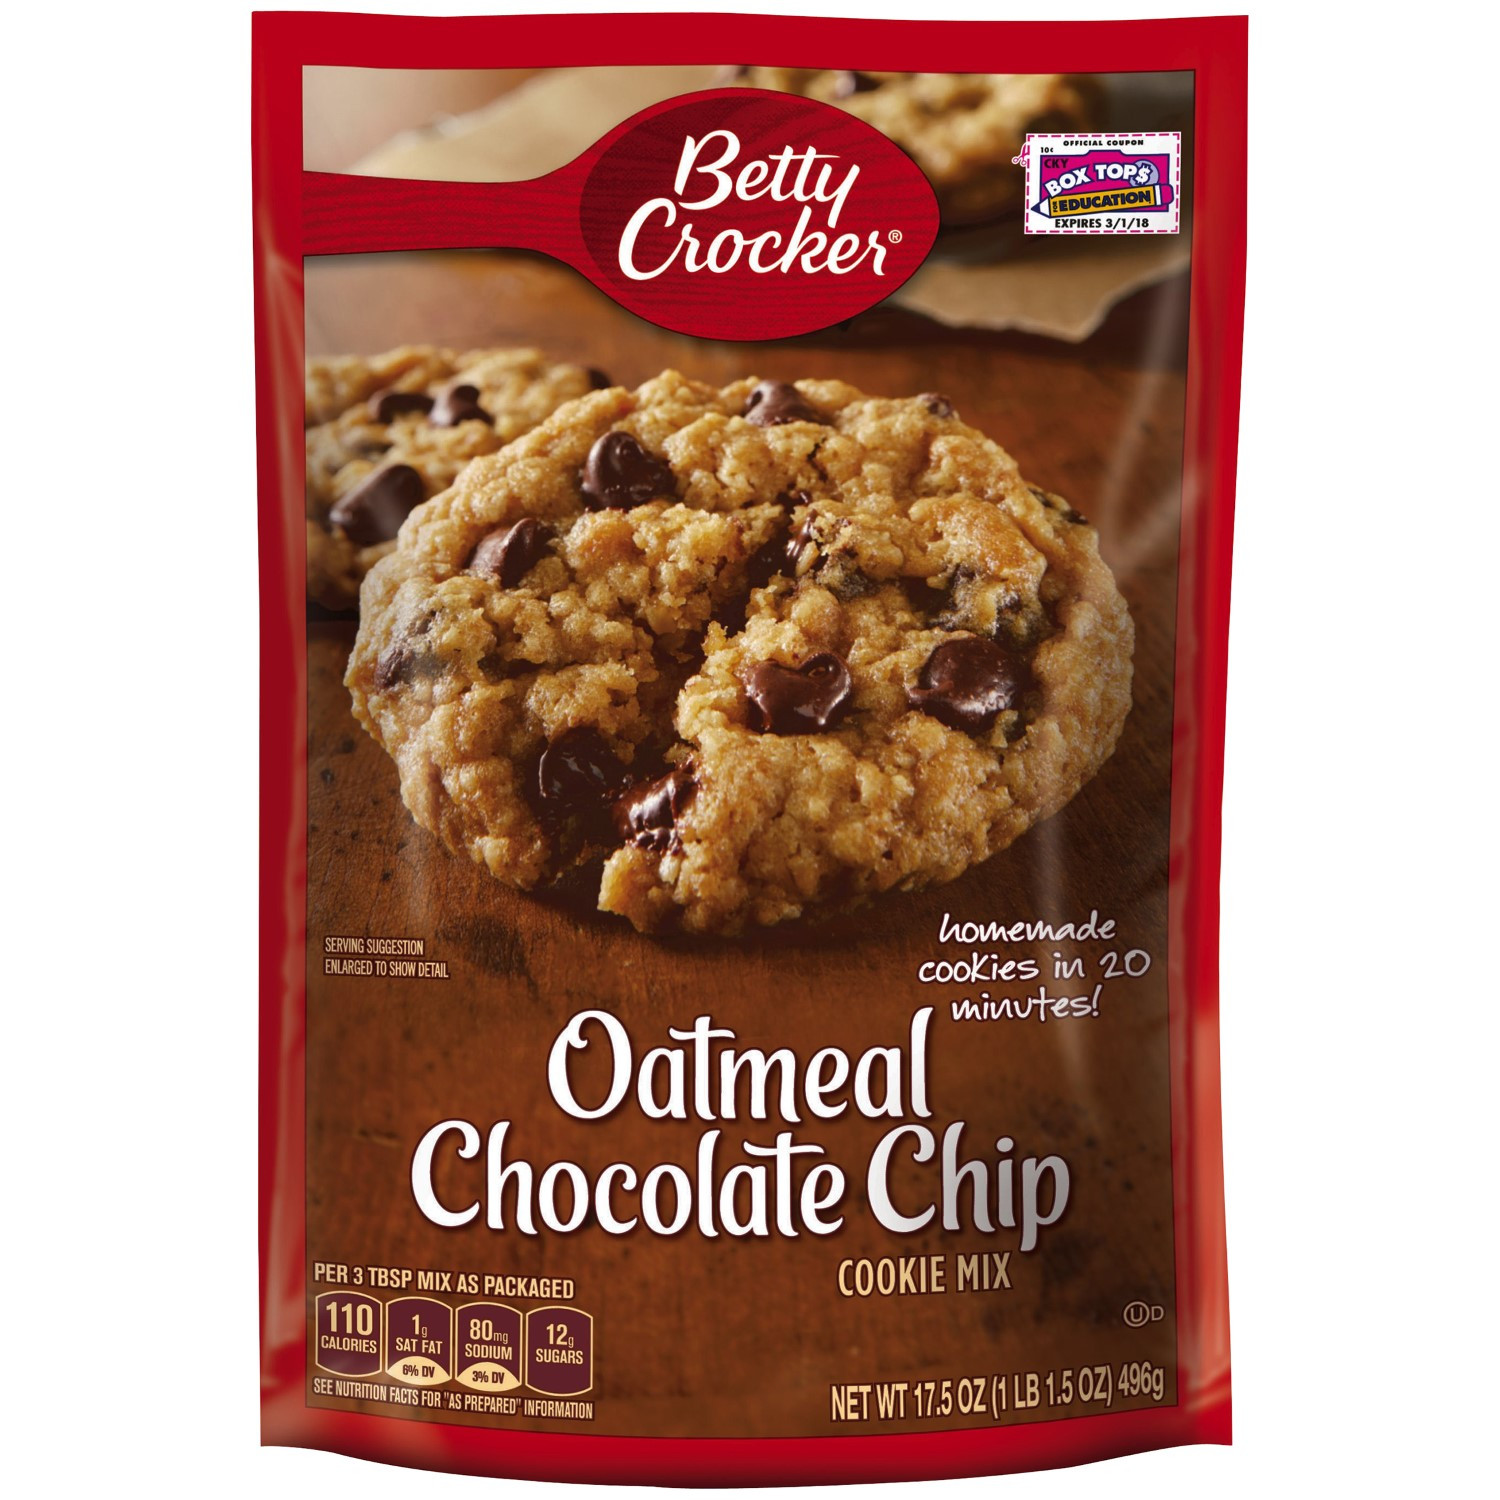 Betty Crocker Oatmeal Chocolate Chip Cookies
 Betty Crocker Cookie Mix Homemade Oatmeal Chocolate Chip